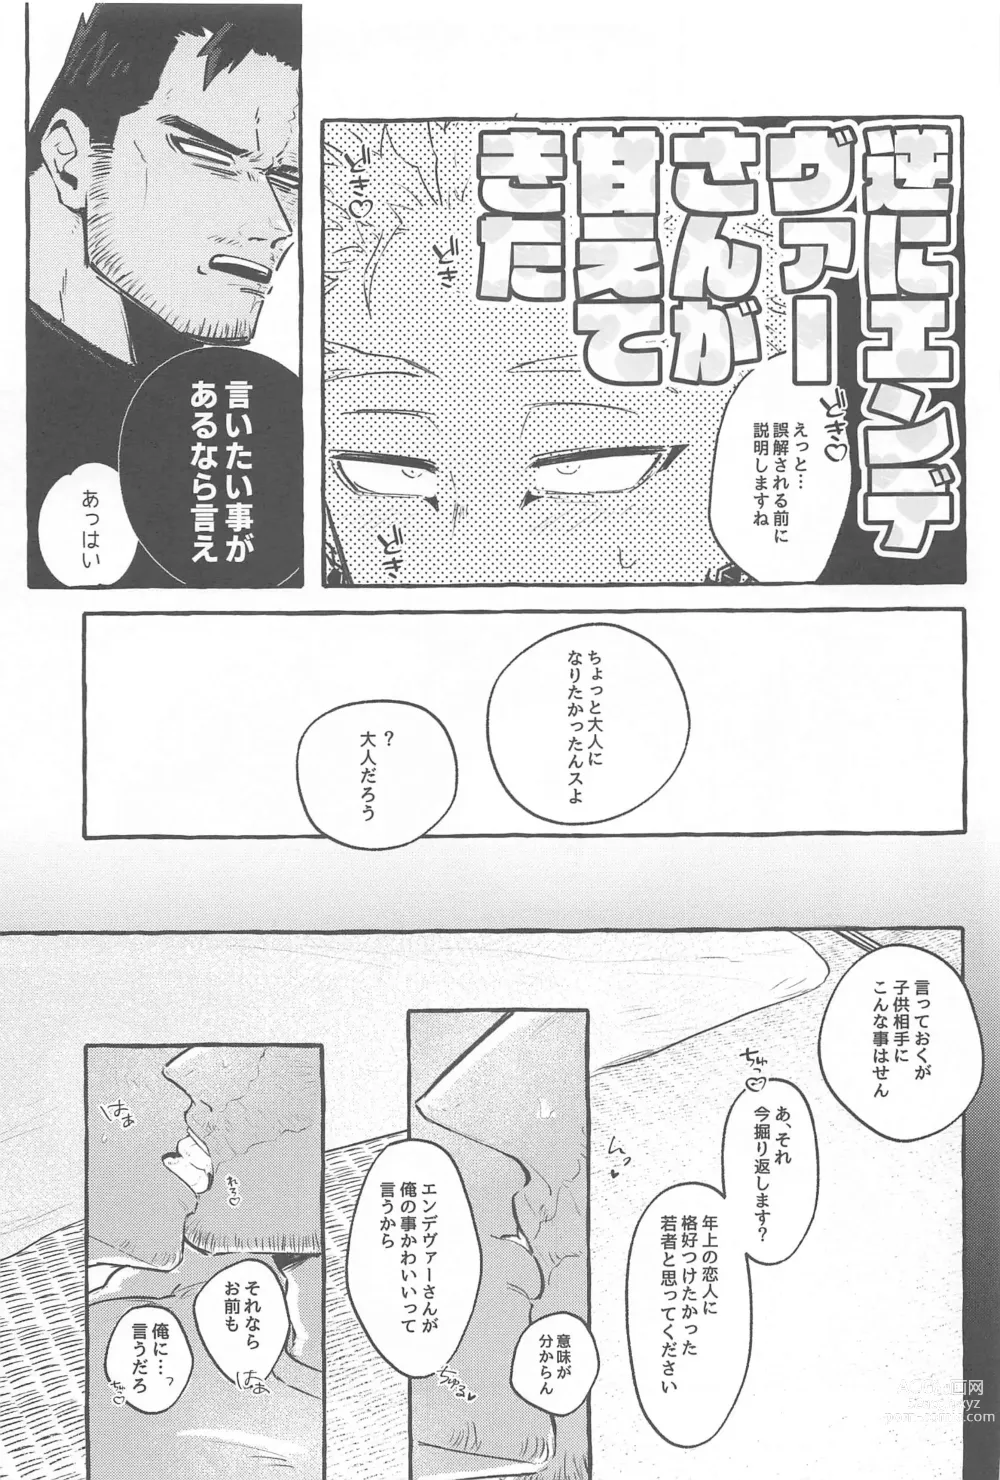 Page 10 of doujinshi Warrgle Sengen